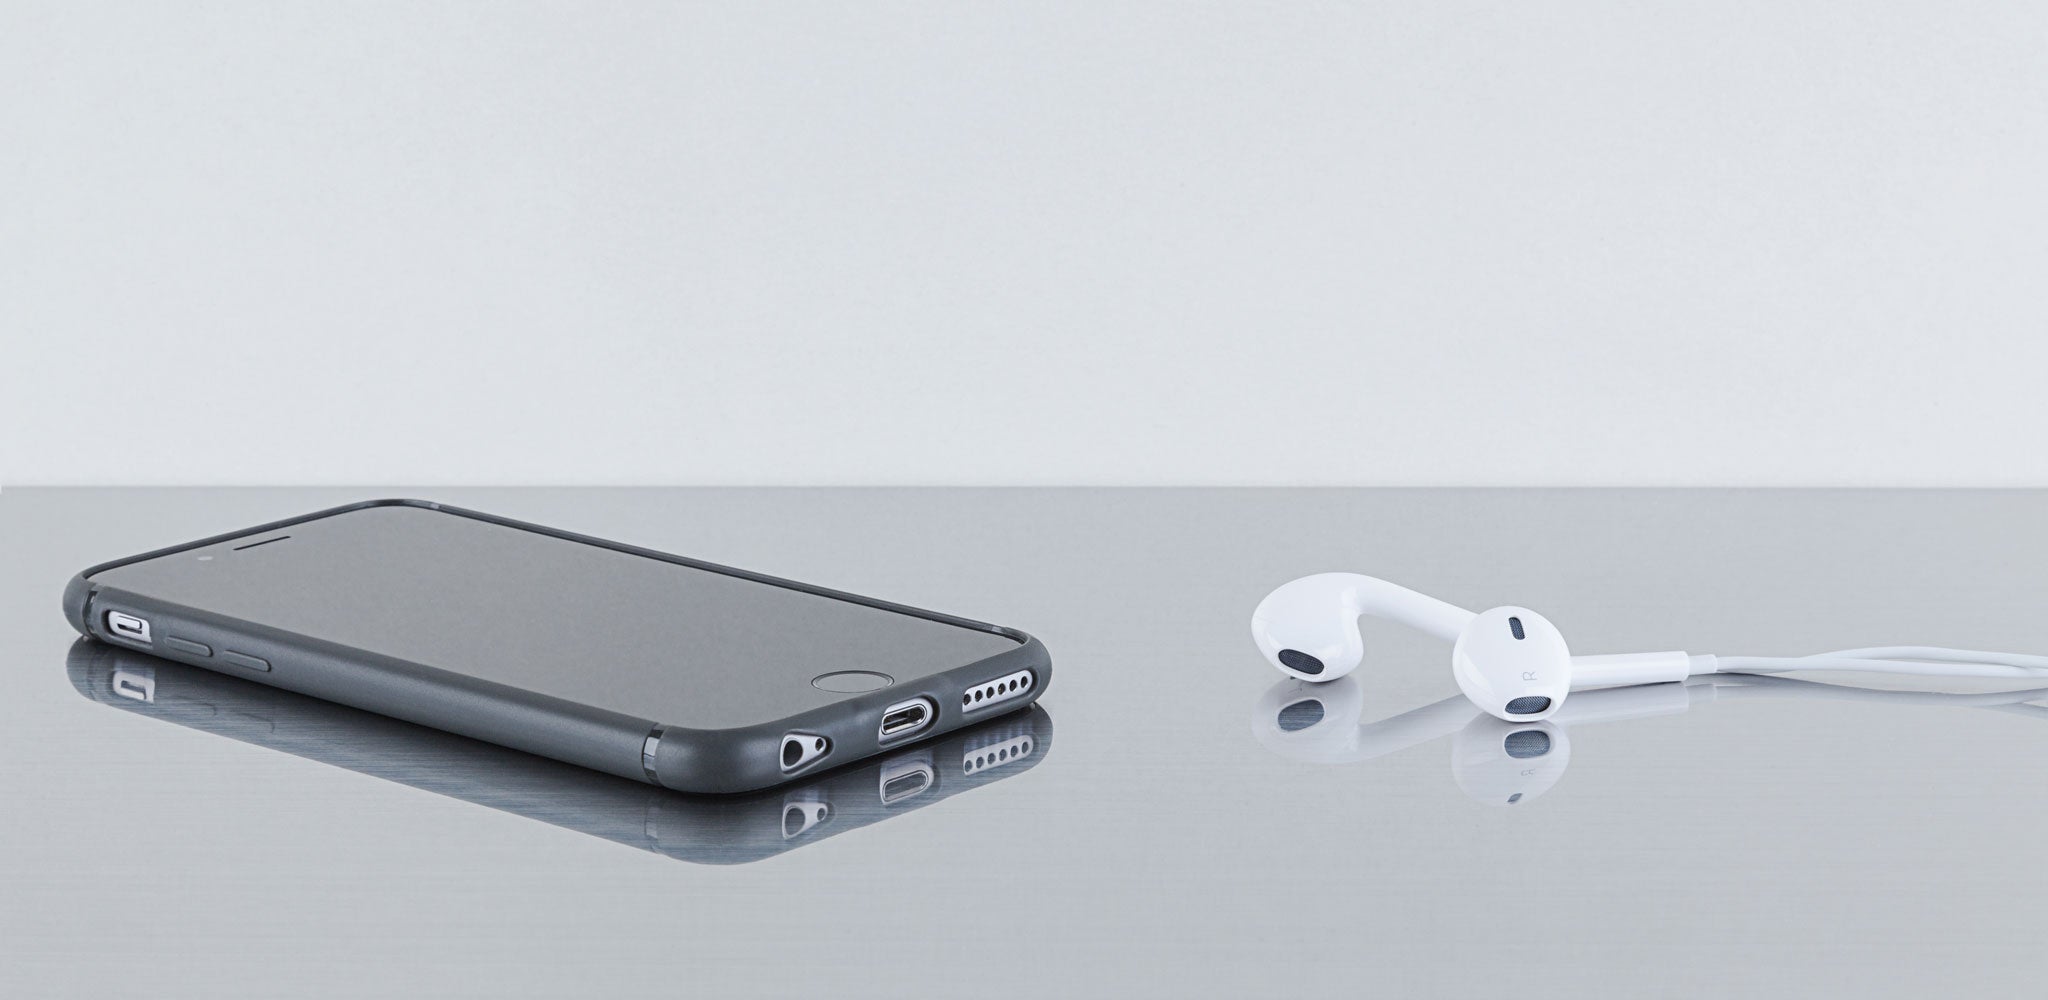 The Sheath | Super slim, shock-absorbing minimalist iPhone case | earbuds